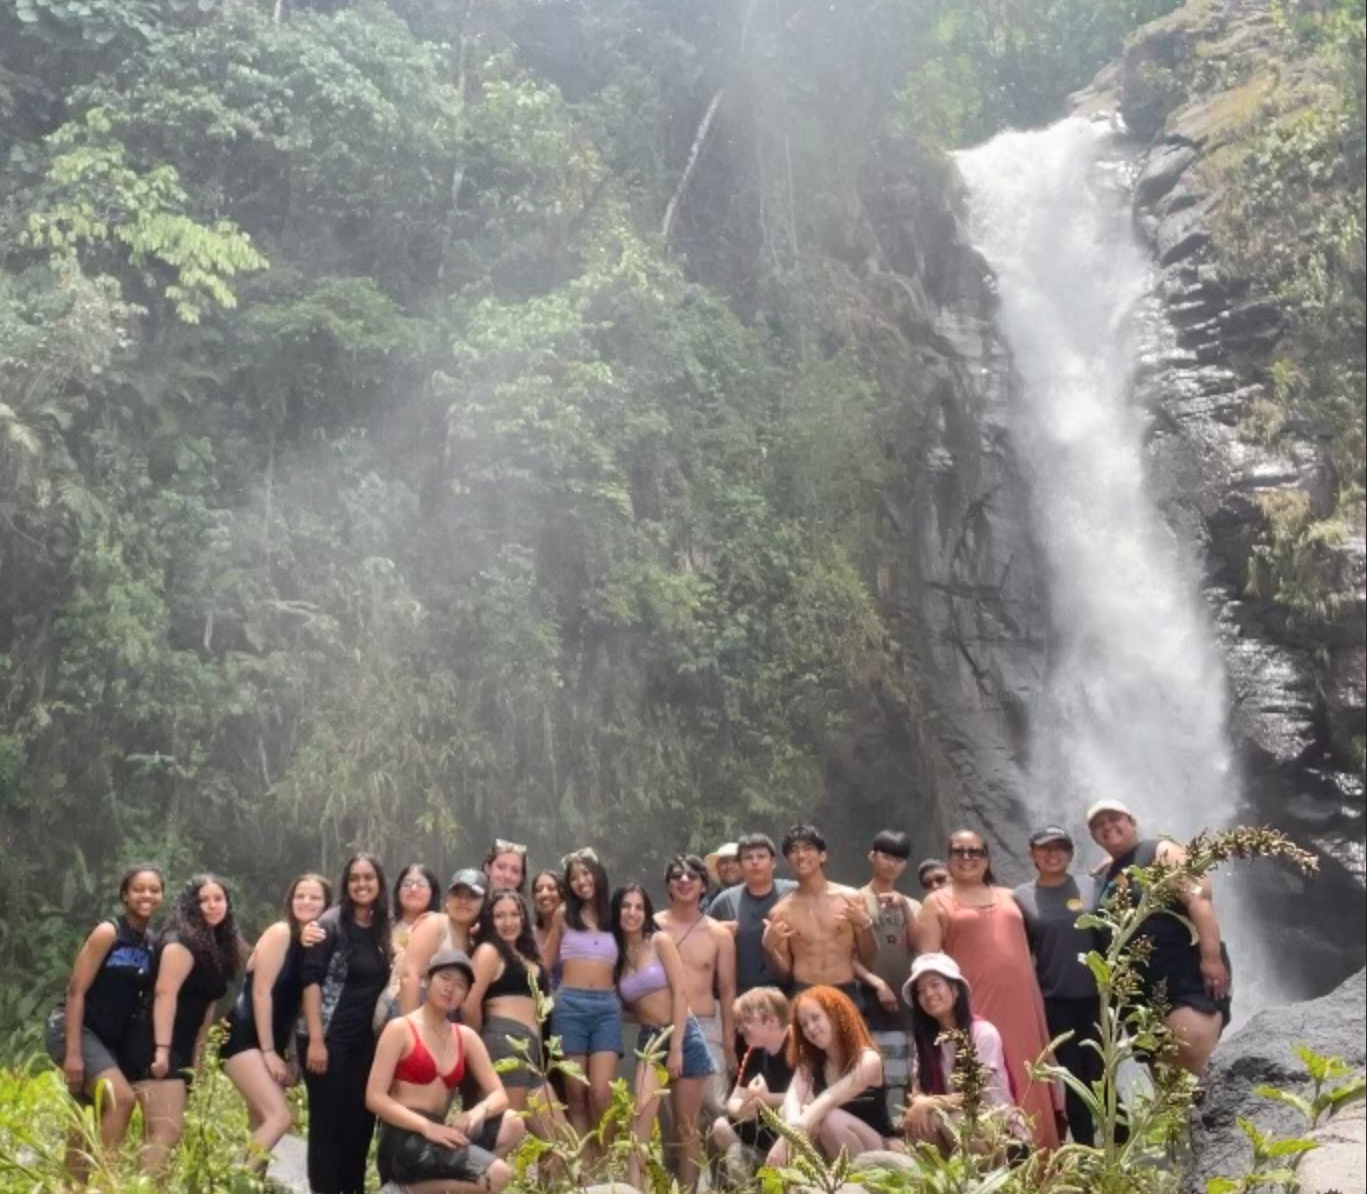 Trip to the Aquiares Waterfall